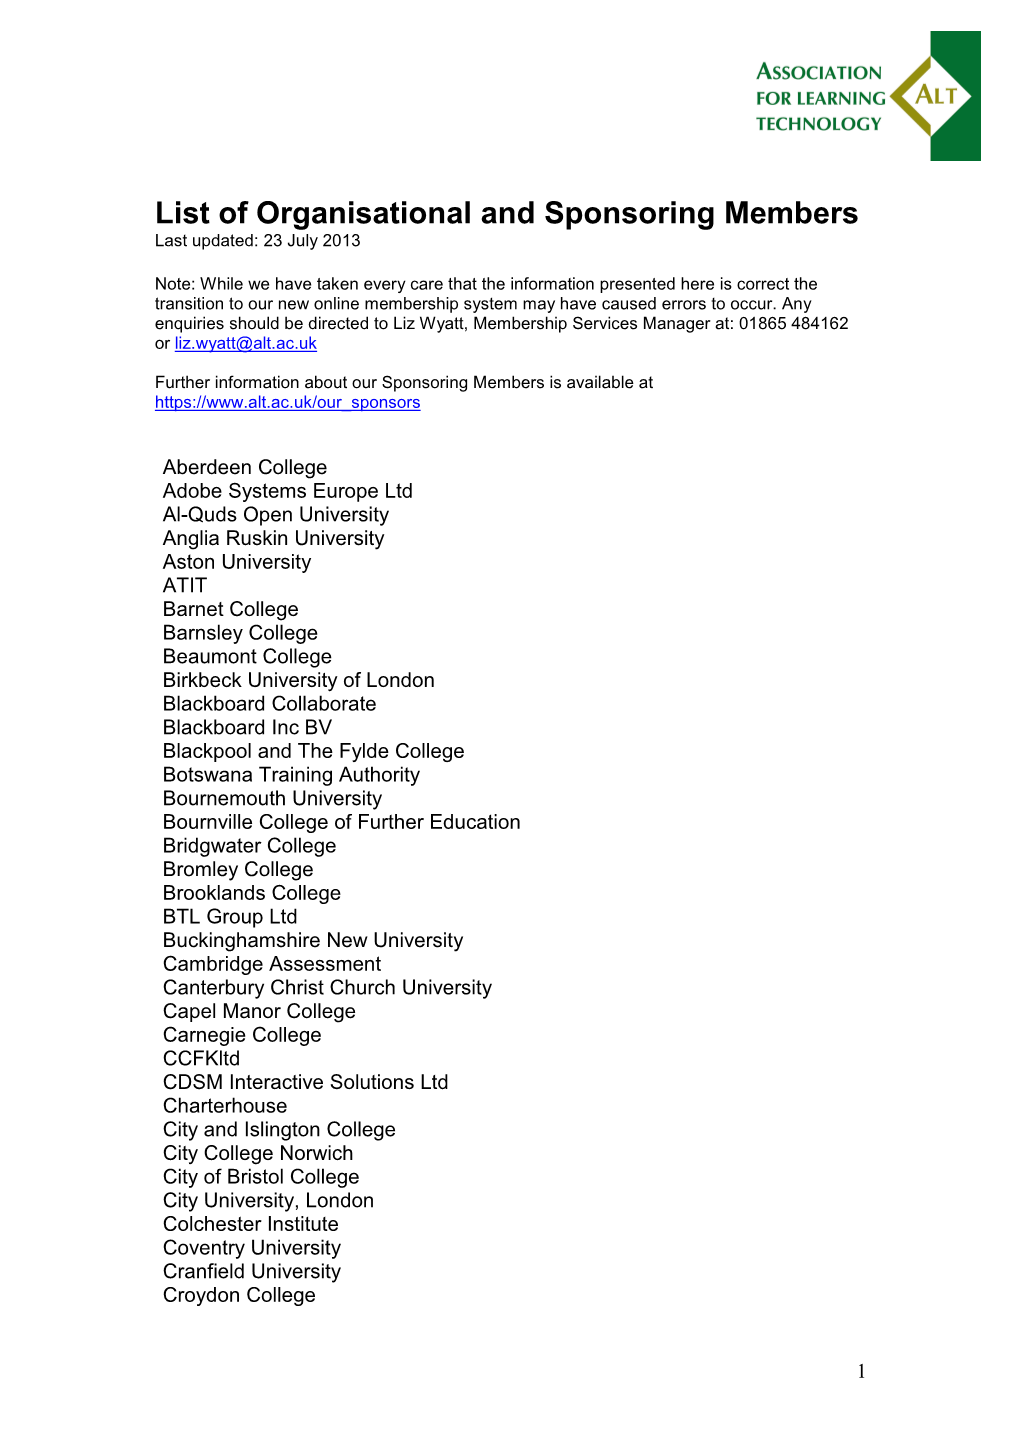 List of Organisational and Sponsoring Members 20130723